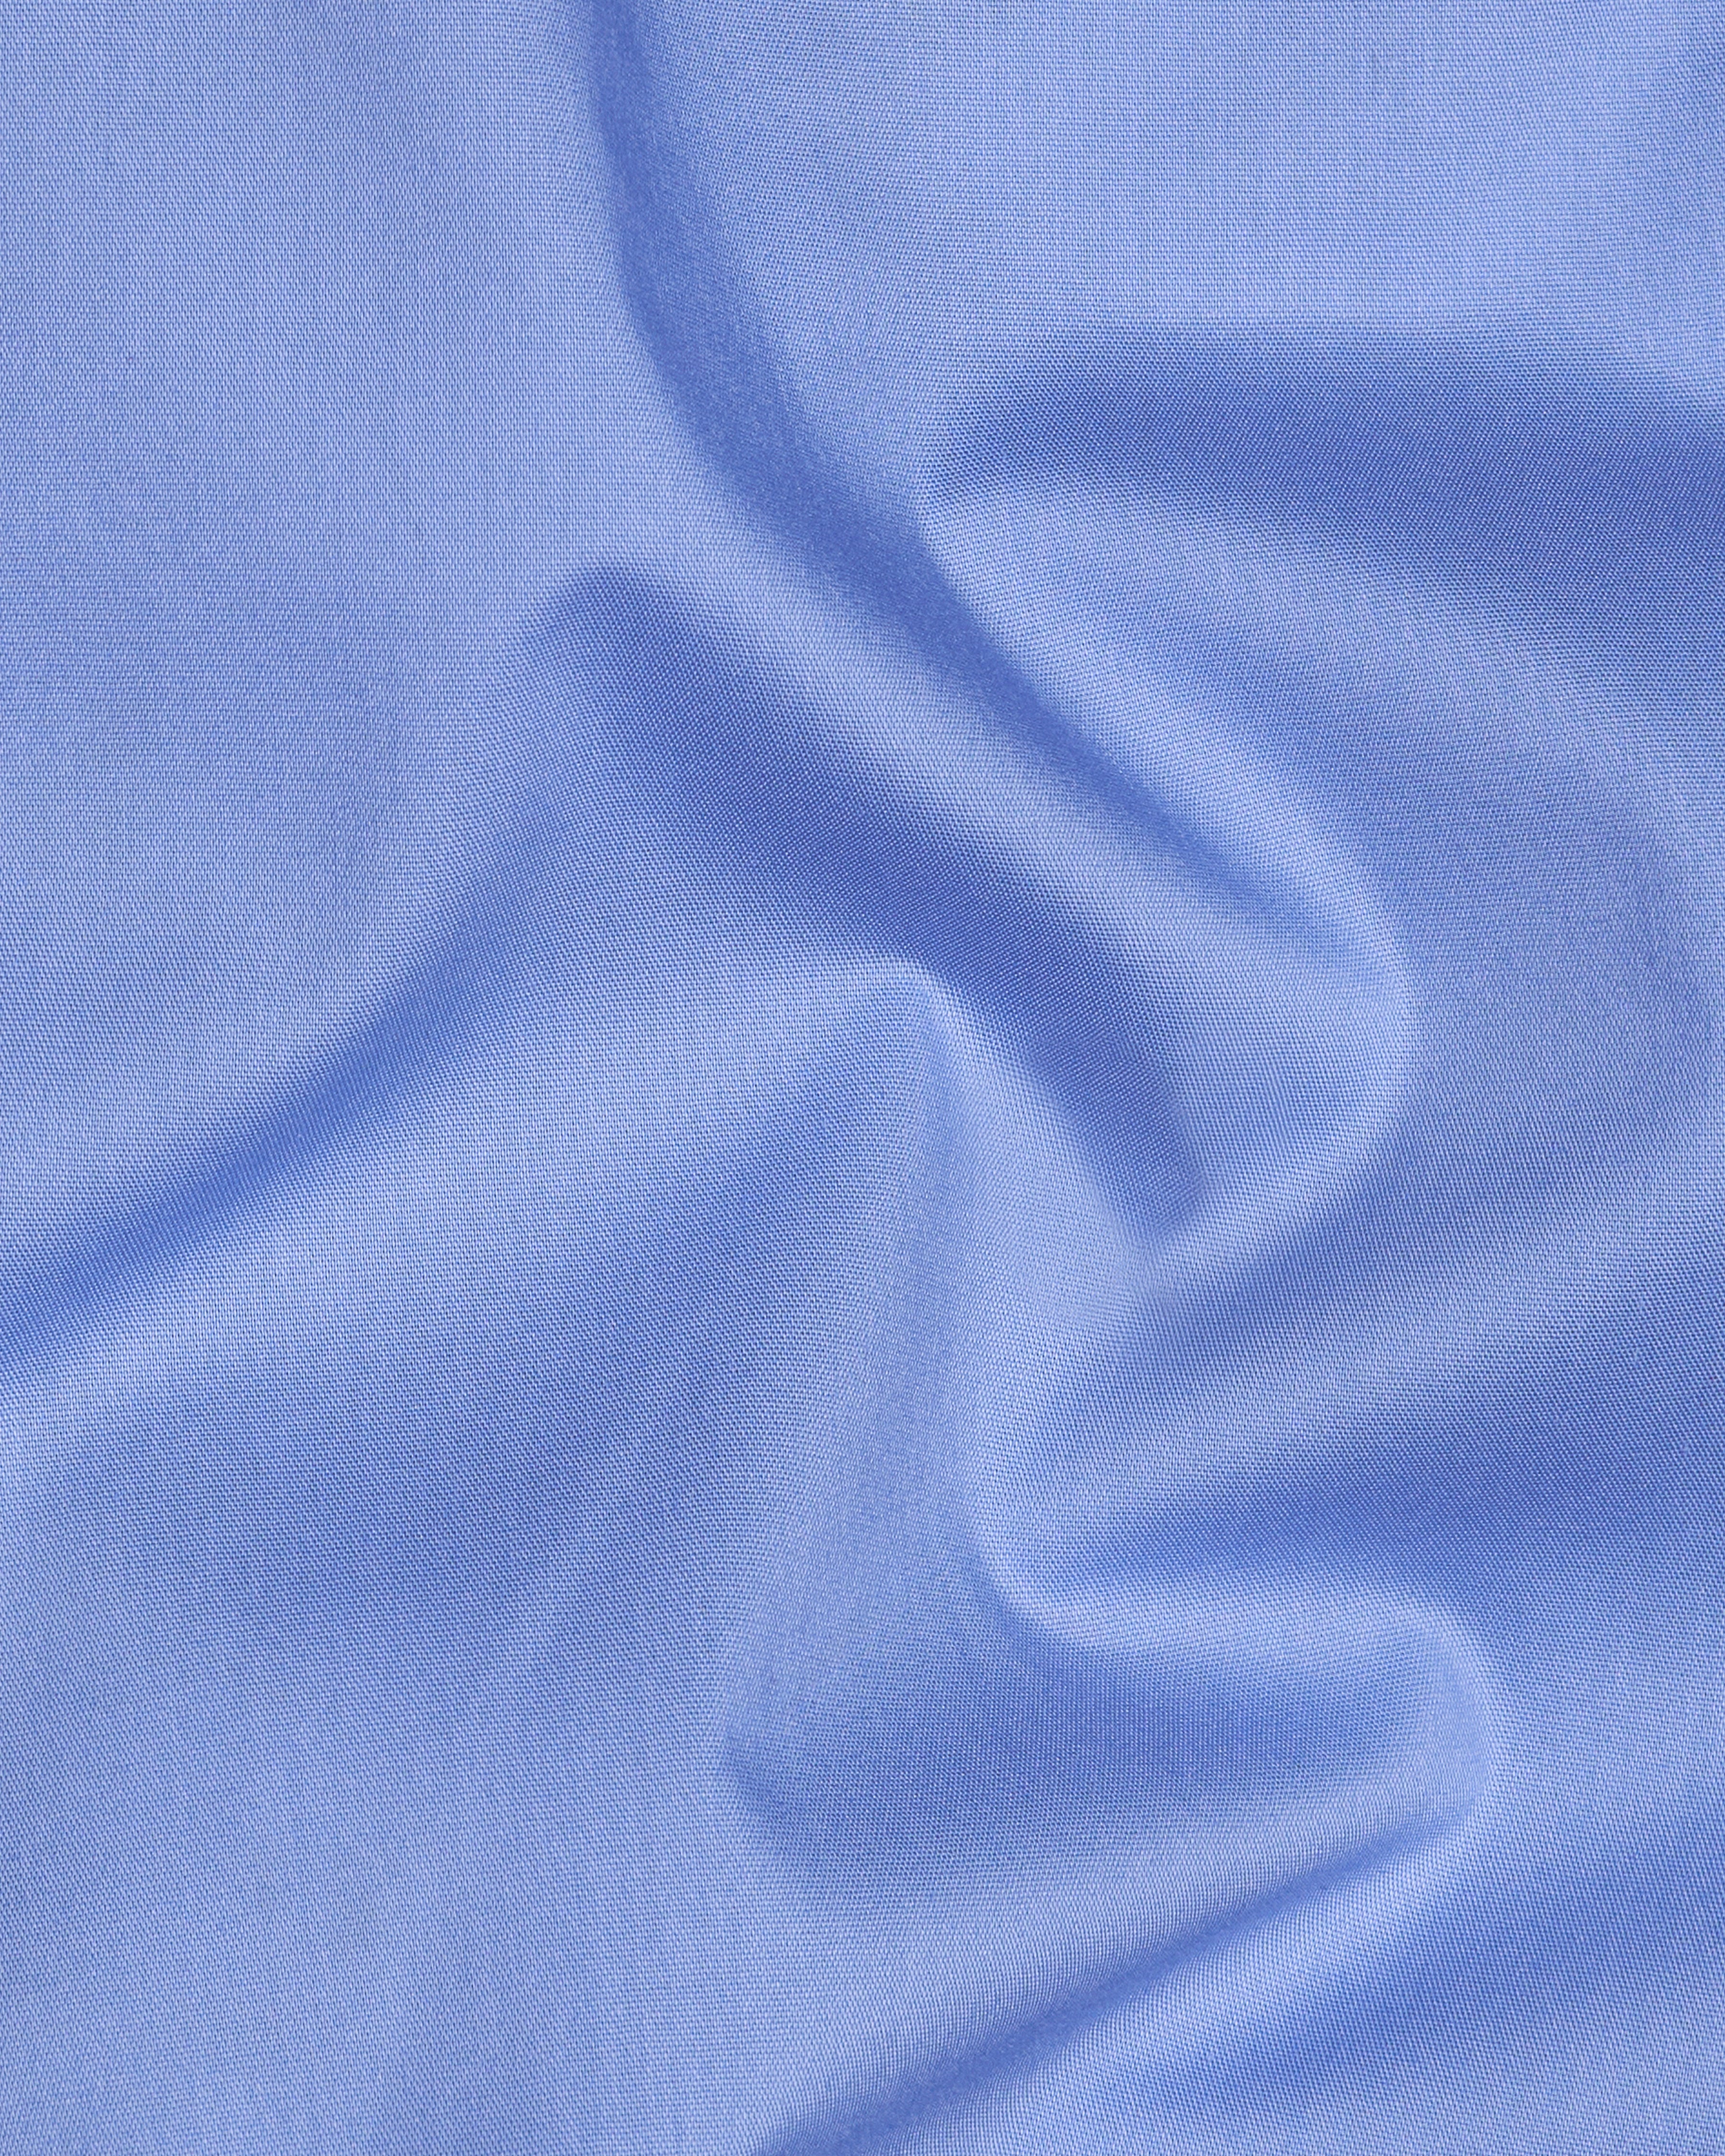 Tealish Blue Premium Cotton Shirt 9660-38,9660-H-38,9660-39,9660-H-39,9660-40,9660-H-40,9660-42,9660-H-42,9660-44,9660-H-44,9660-46,9660-H-46,9660-48,9660-H-48,9660-50,9660-H-50,9660-52,9660-H-52